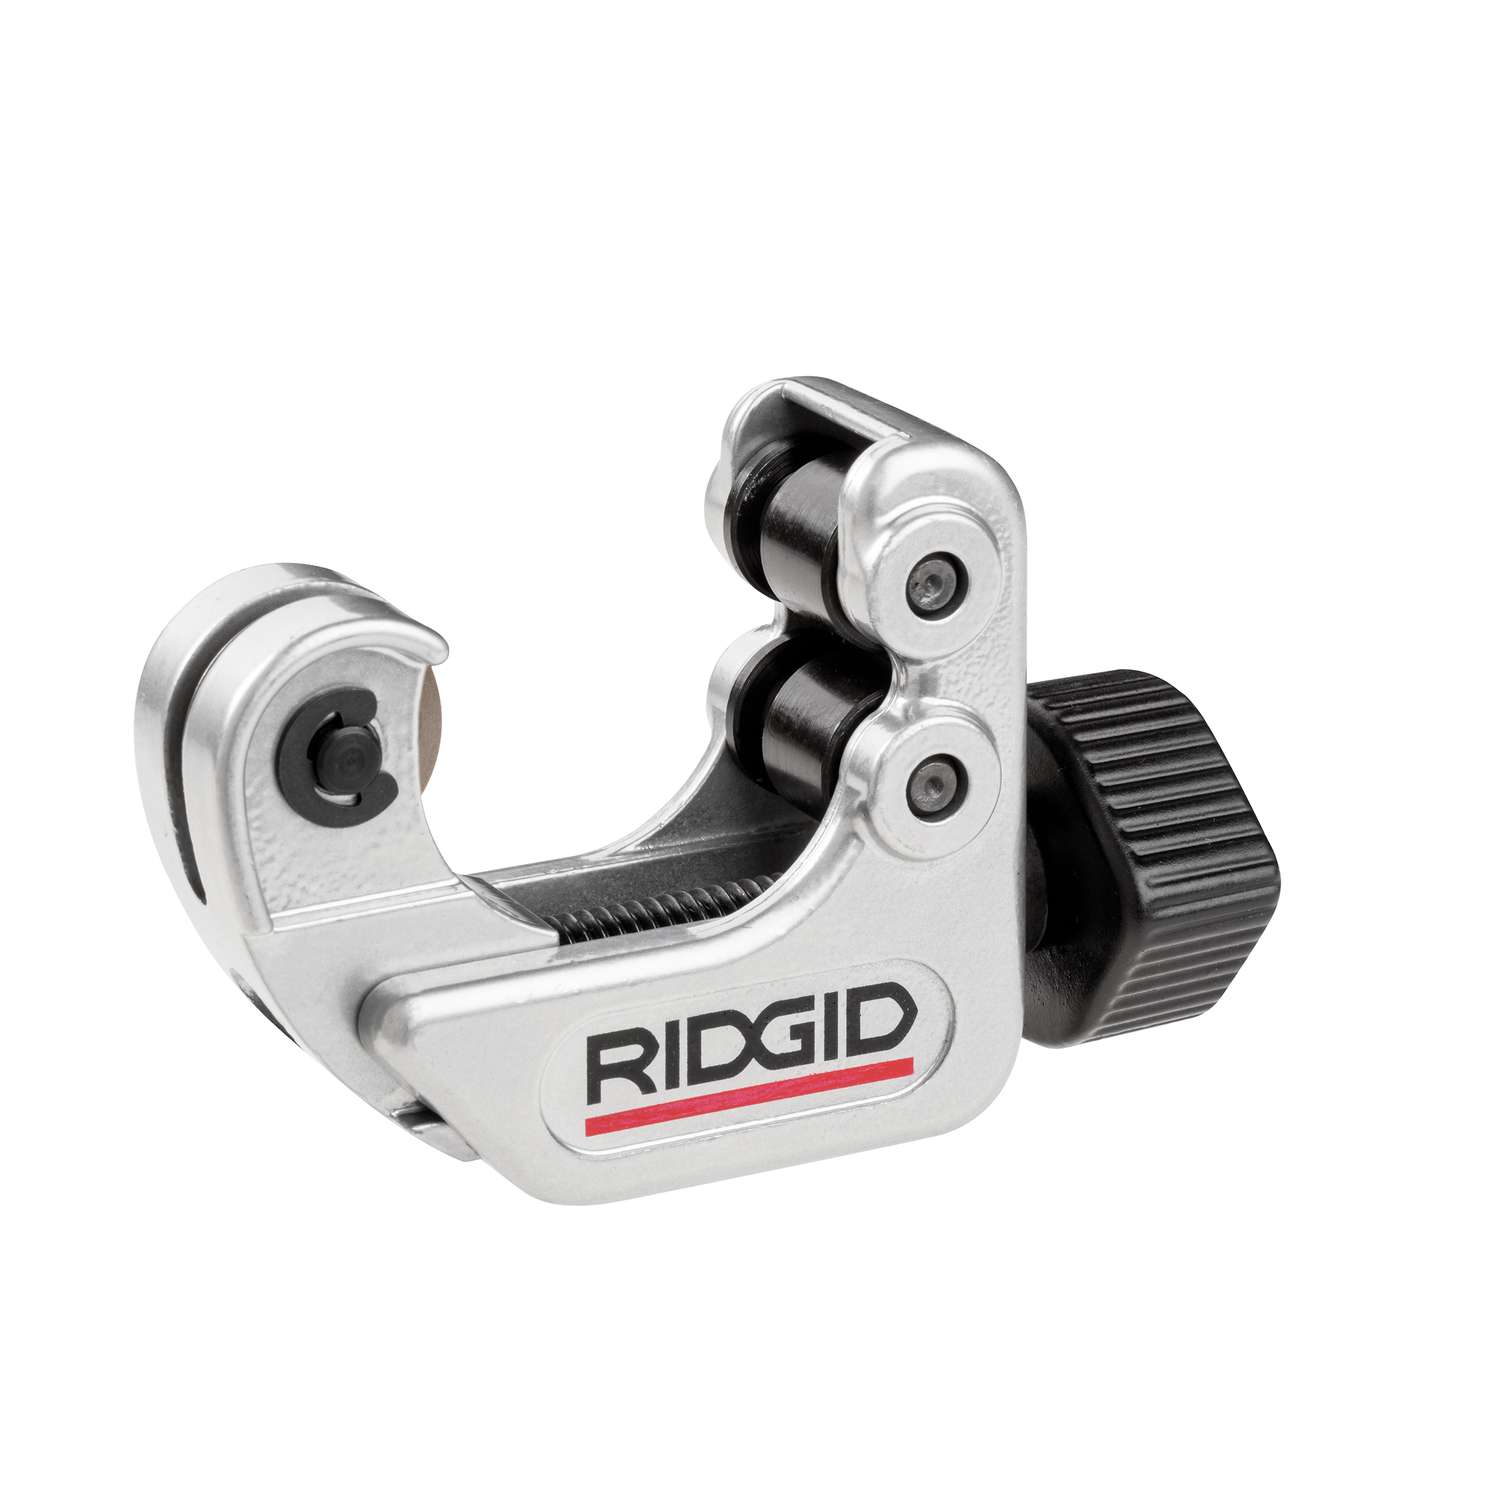 RIDGID 1-1/8 in. Pipe Cutter Silver - Ace Hardware